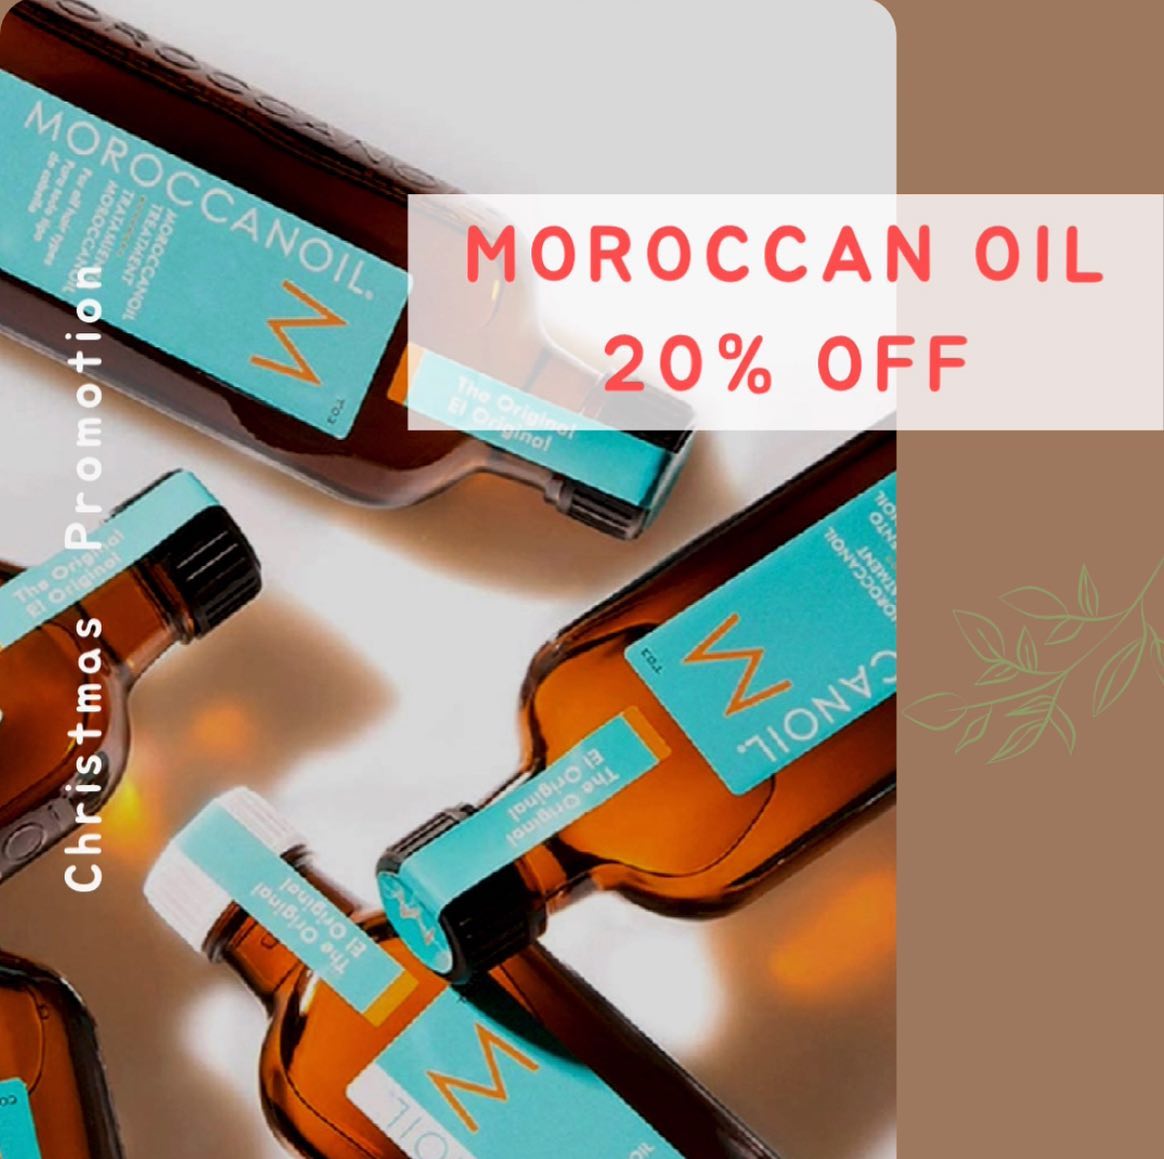 Special Promotion  Moroccanoil get discount 20%off️
 1780B→1424B  สินค้าโปรโมชั่น  Moroccanoil ลด 20%️  พิเศษ ! Moroccan oil ลดราคา 20%
เหลือเพียง 1,424 บาทเท่านั้น !
ตัวช่วยบำรุงผมให้นุ่มลื่นจัดทรงง่าย และยังปกป้องเส้นผมจากความร้อนอีกด้วย เฉพาะเดือนธันวาคมนี้เท่านั้น !  …………………………  ร้าน Hair Room Sora 299/7 ชั้น1, Sukhumvit Living Town, ซอยสุขุมวิท21(อโศก)
โทรศัพท์ : 02-169-1622
ร้านเปิดทุกวัน 10.00-19.00 น.
** สำหรับทำเคมี รับจองถึง 17:00 น. **
#Hairroomsora #Hairroomsorabangkok #Hairsalon #Hairstyle #Sukhumvitlivingtown #sukhumvit21 #Japanesesalon #DigitalPerm #デジパ #ヘアールームソラ #fashioncolor #ร้านซาลอนญี่ปุ่น #ซาลอน #ทำผมรับปริญญา #ทำผมออกงาน #รับทำผม #ดัดดิจิตอล #ยืดผม #ย้อมผม ดูน้อยลง